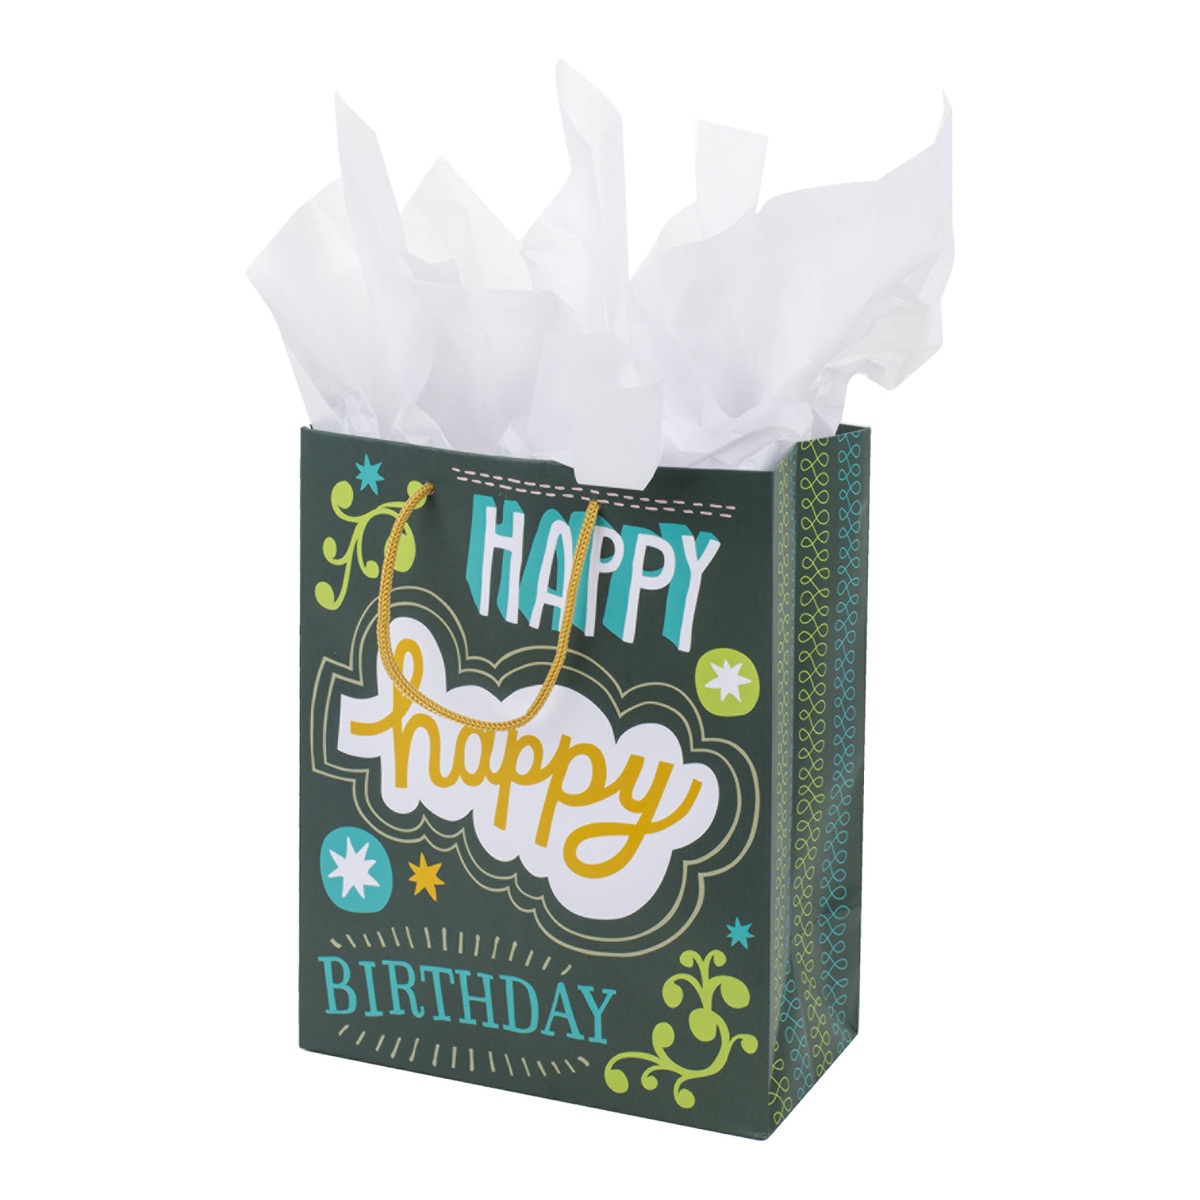 slide 1 of 1, Hallmark Medium Birthday Gift Bag with Tissue Paper, 1 ct